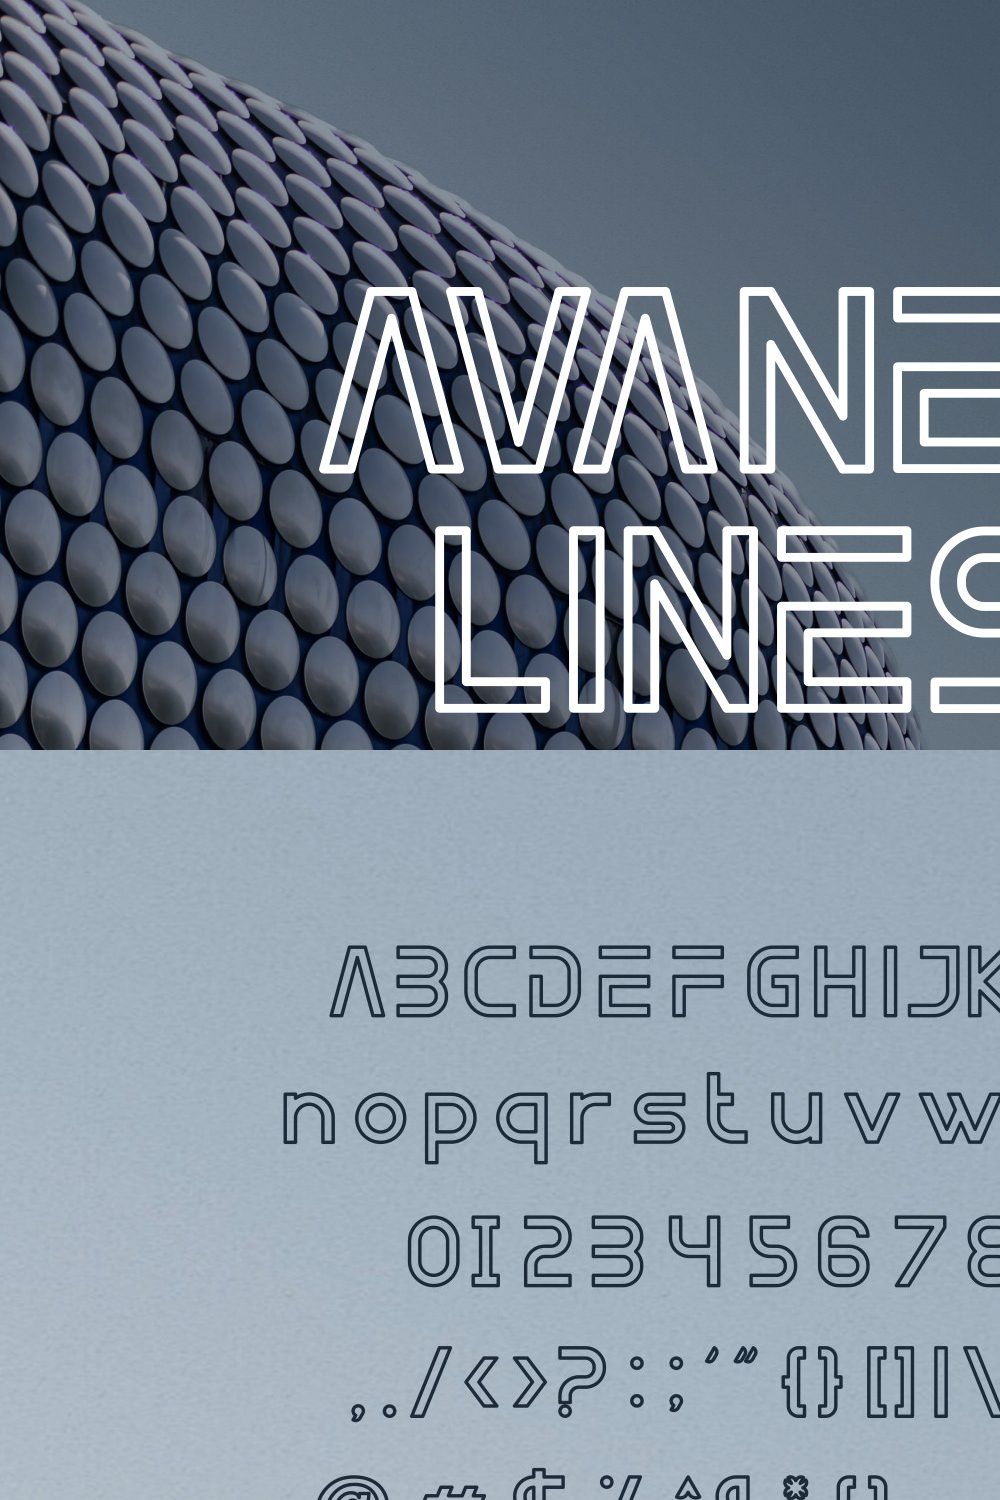 Avaner lines sans serif font pinterest preview image.